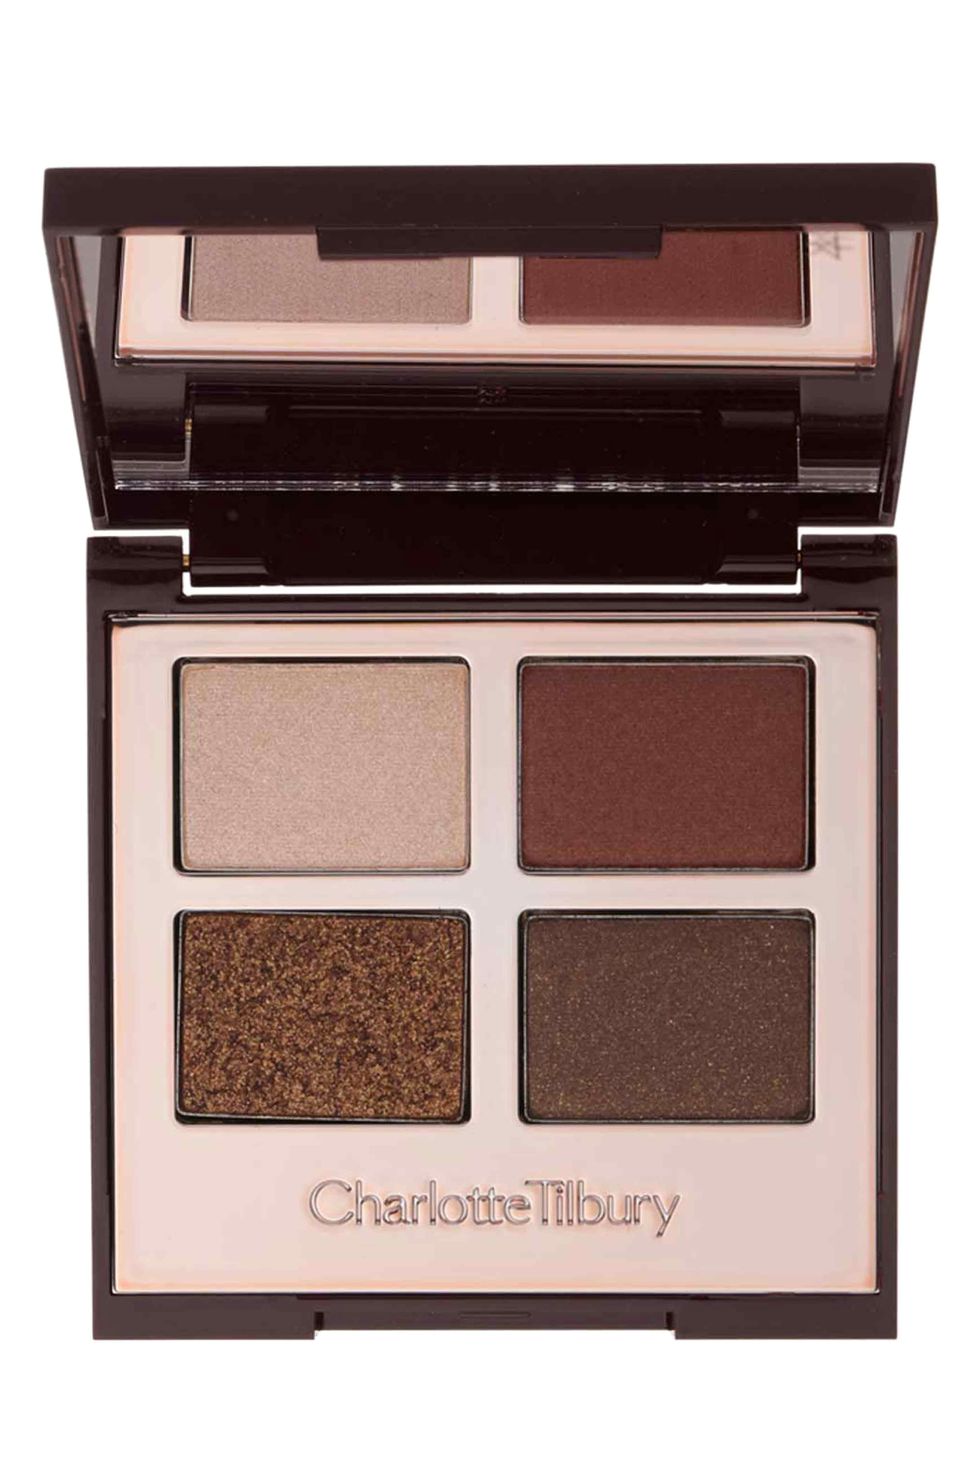 Charlotte Tilbury Luxury Eyeshadow Palette in The Bella Sofia